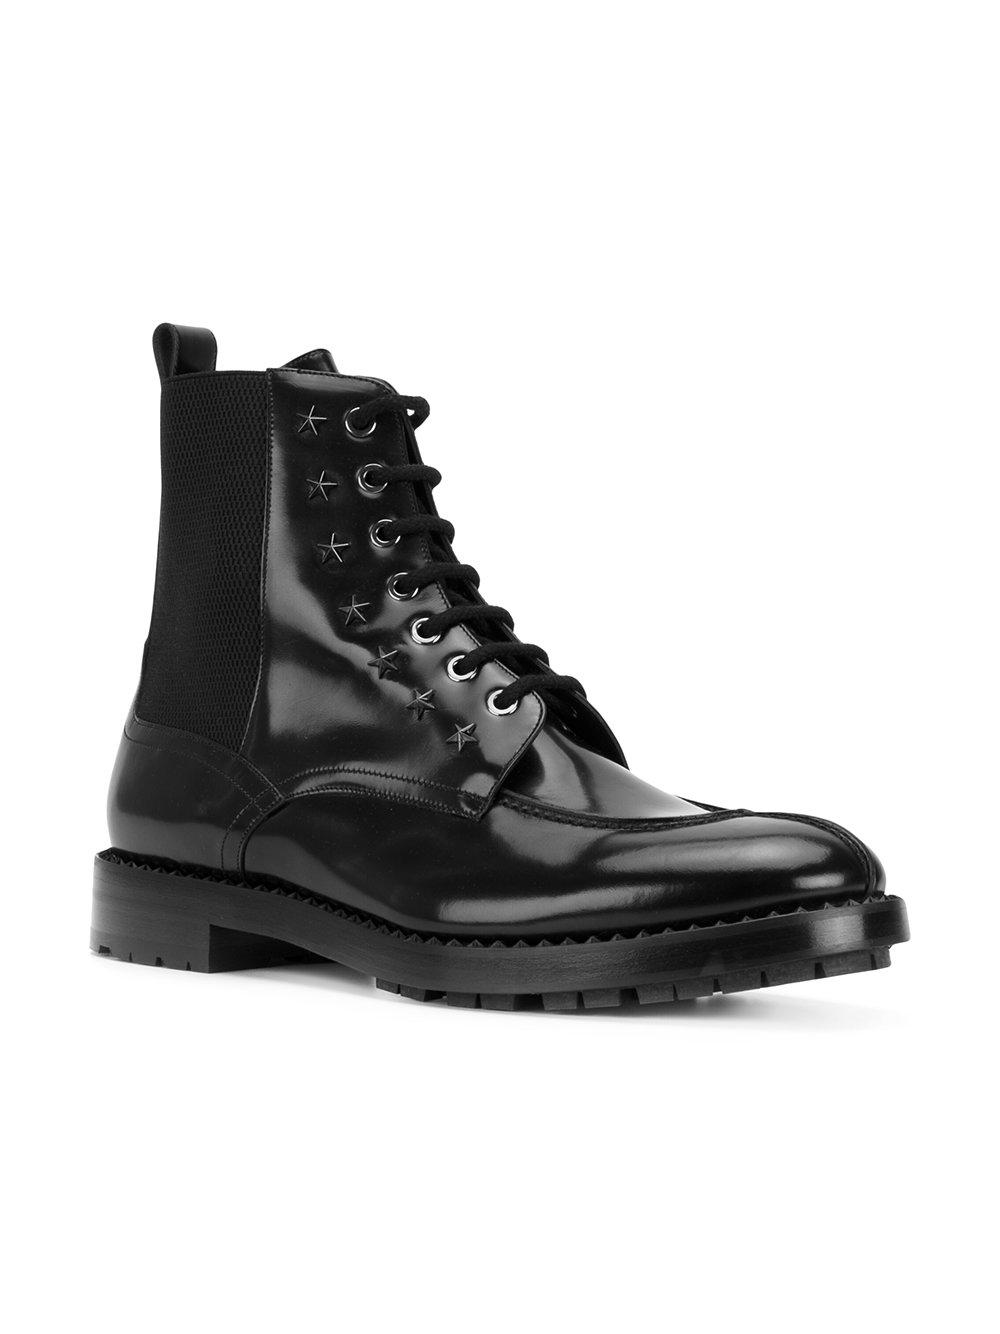 Lyst - Jimmy Choo Troyast Boots in Black for Men